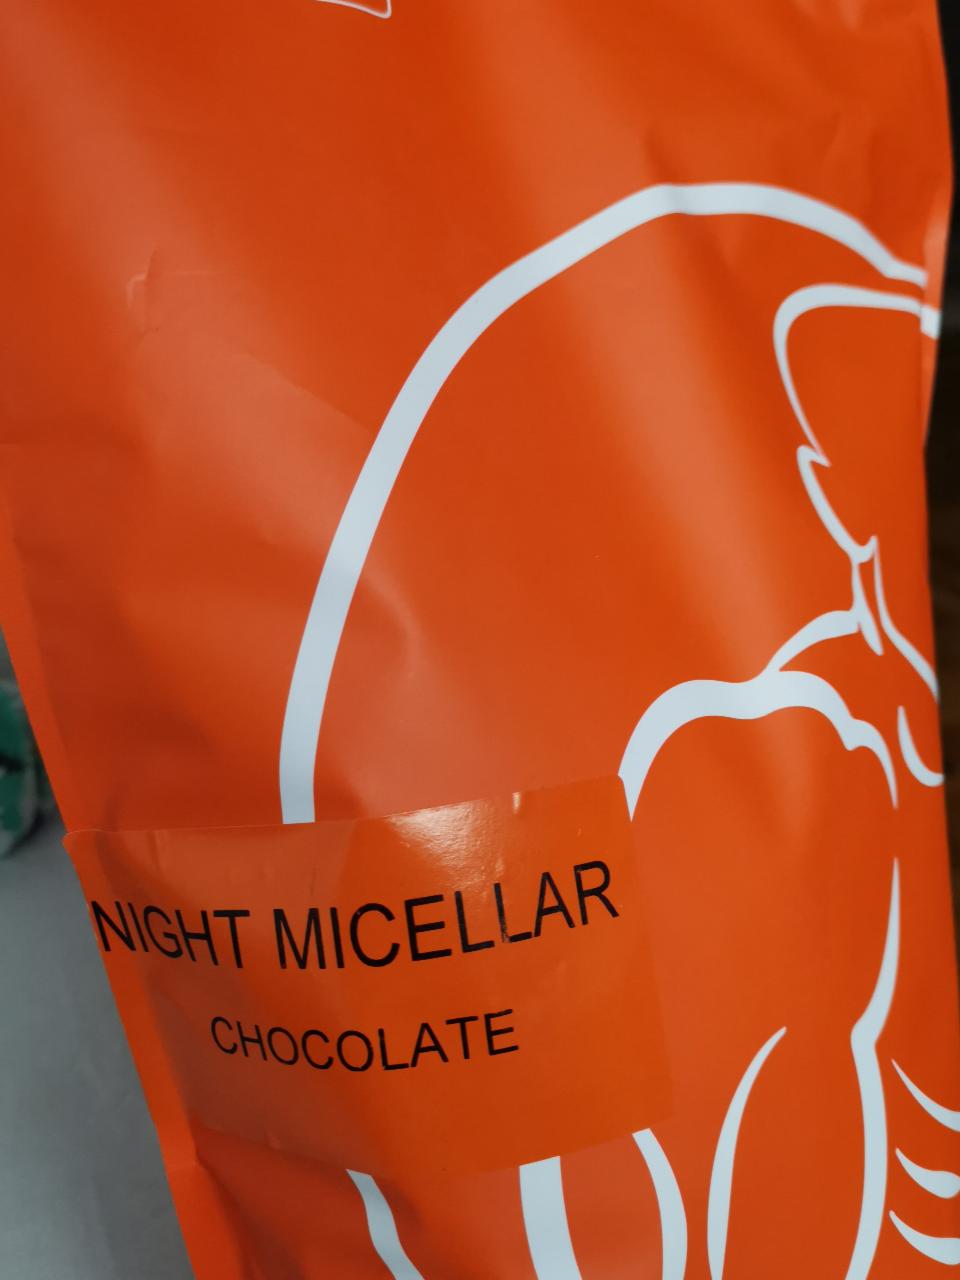 Fotografie - night micellar chocolate Still Mass